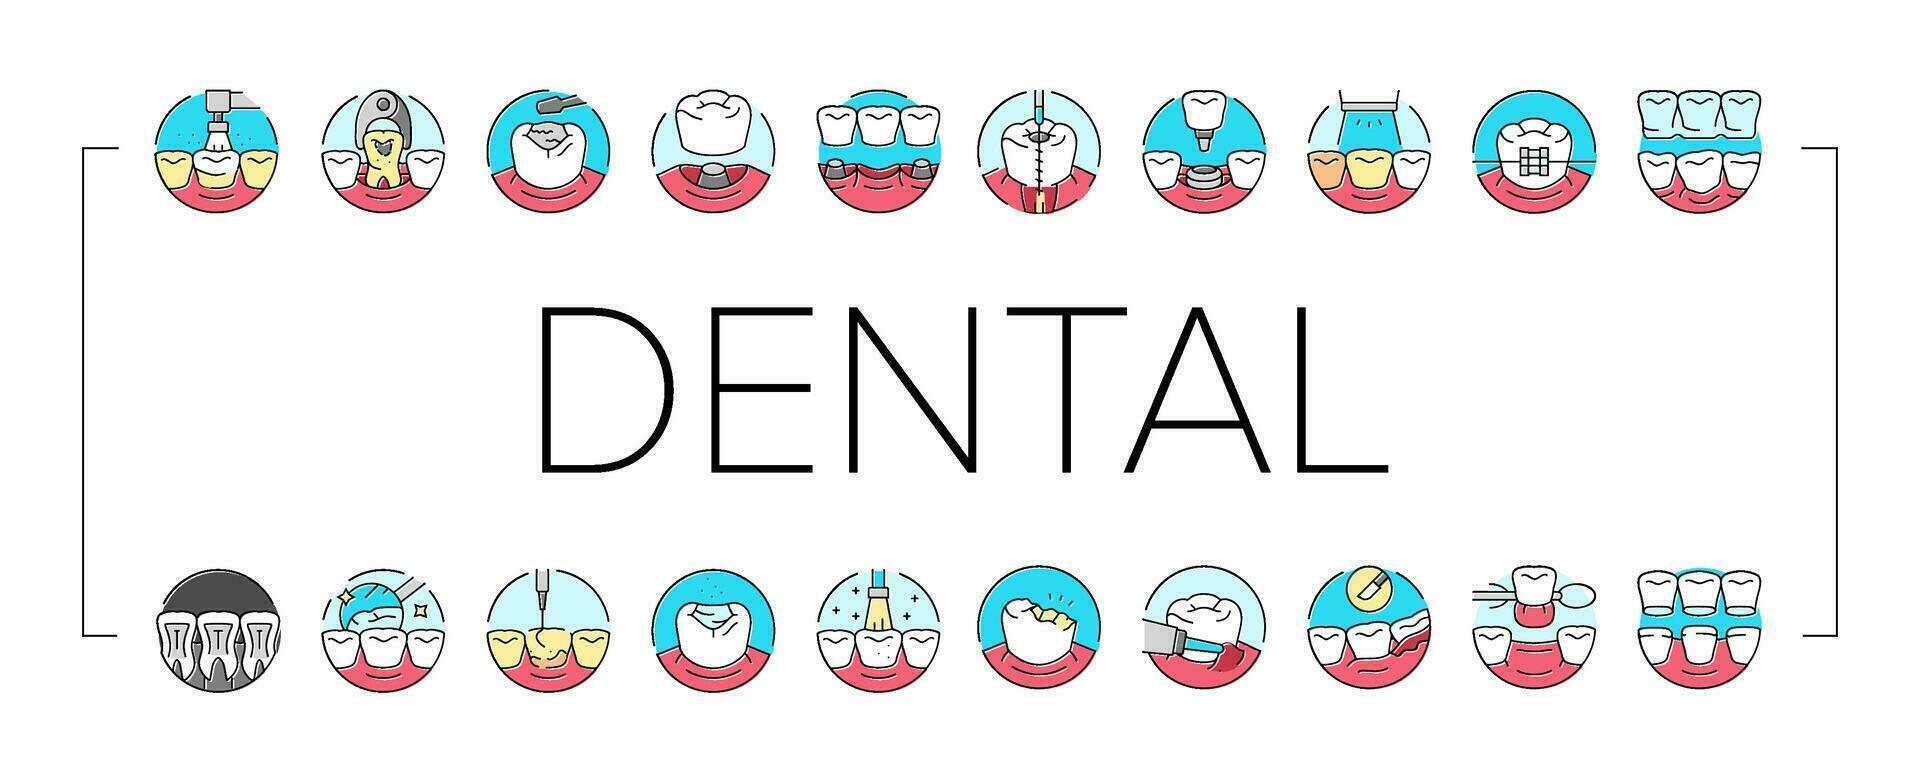 dental procedure clinic icons set vector